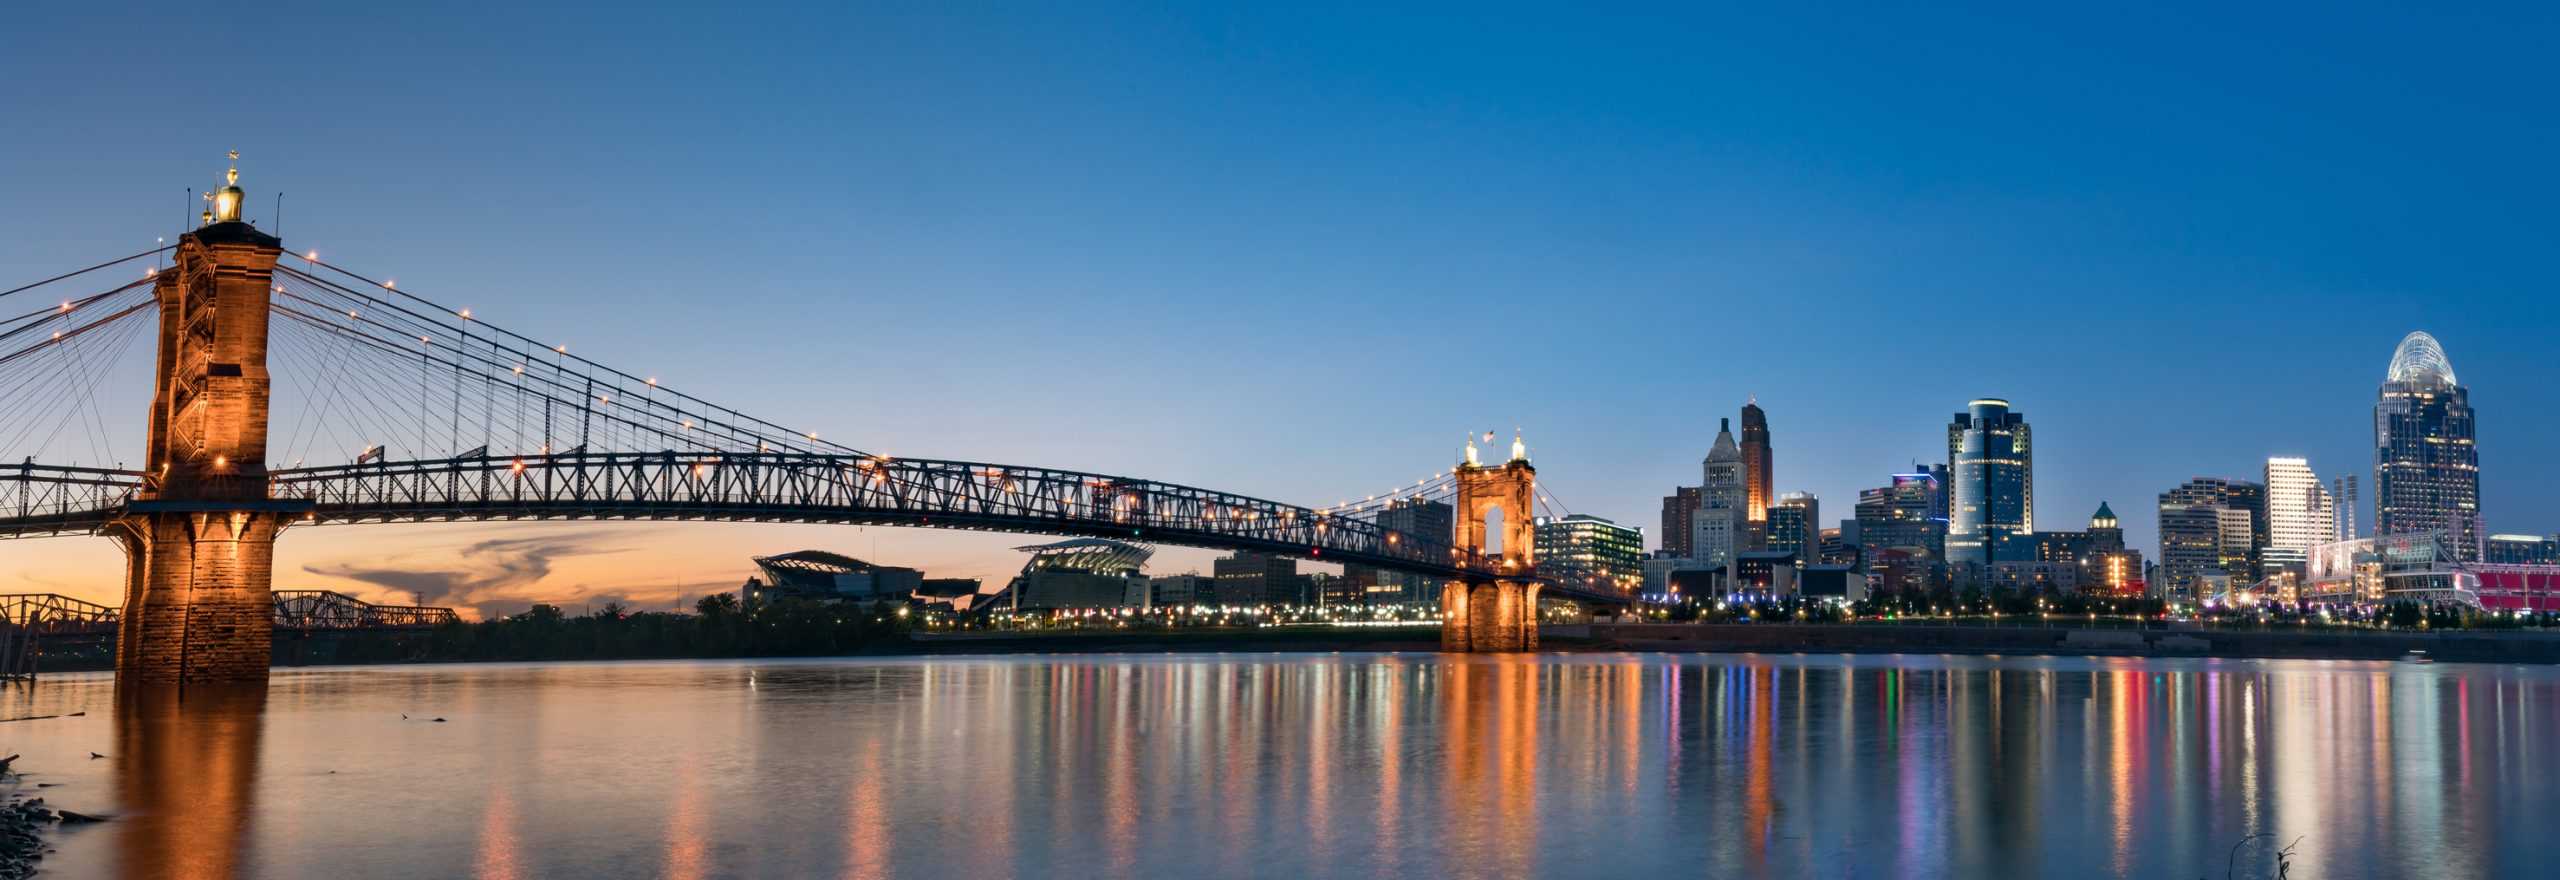 Cincinnati downtown image